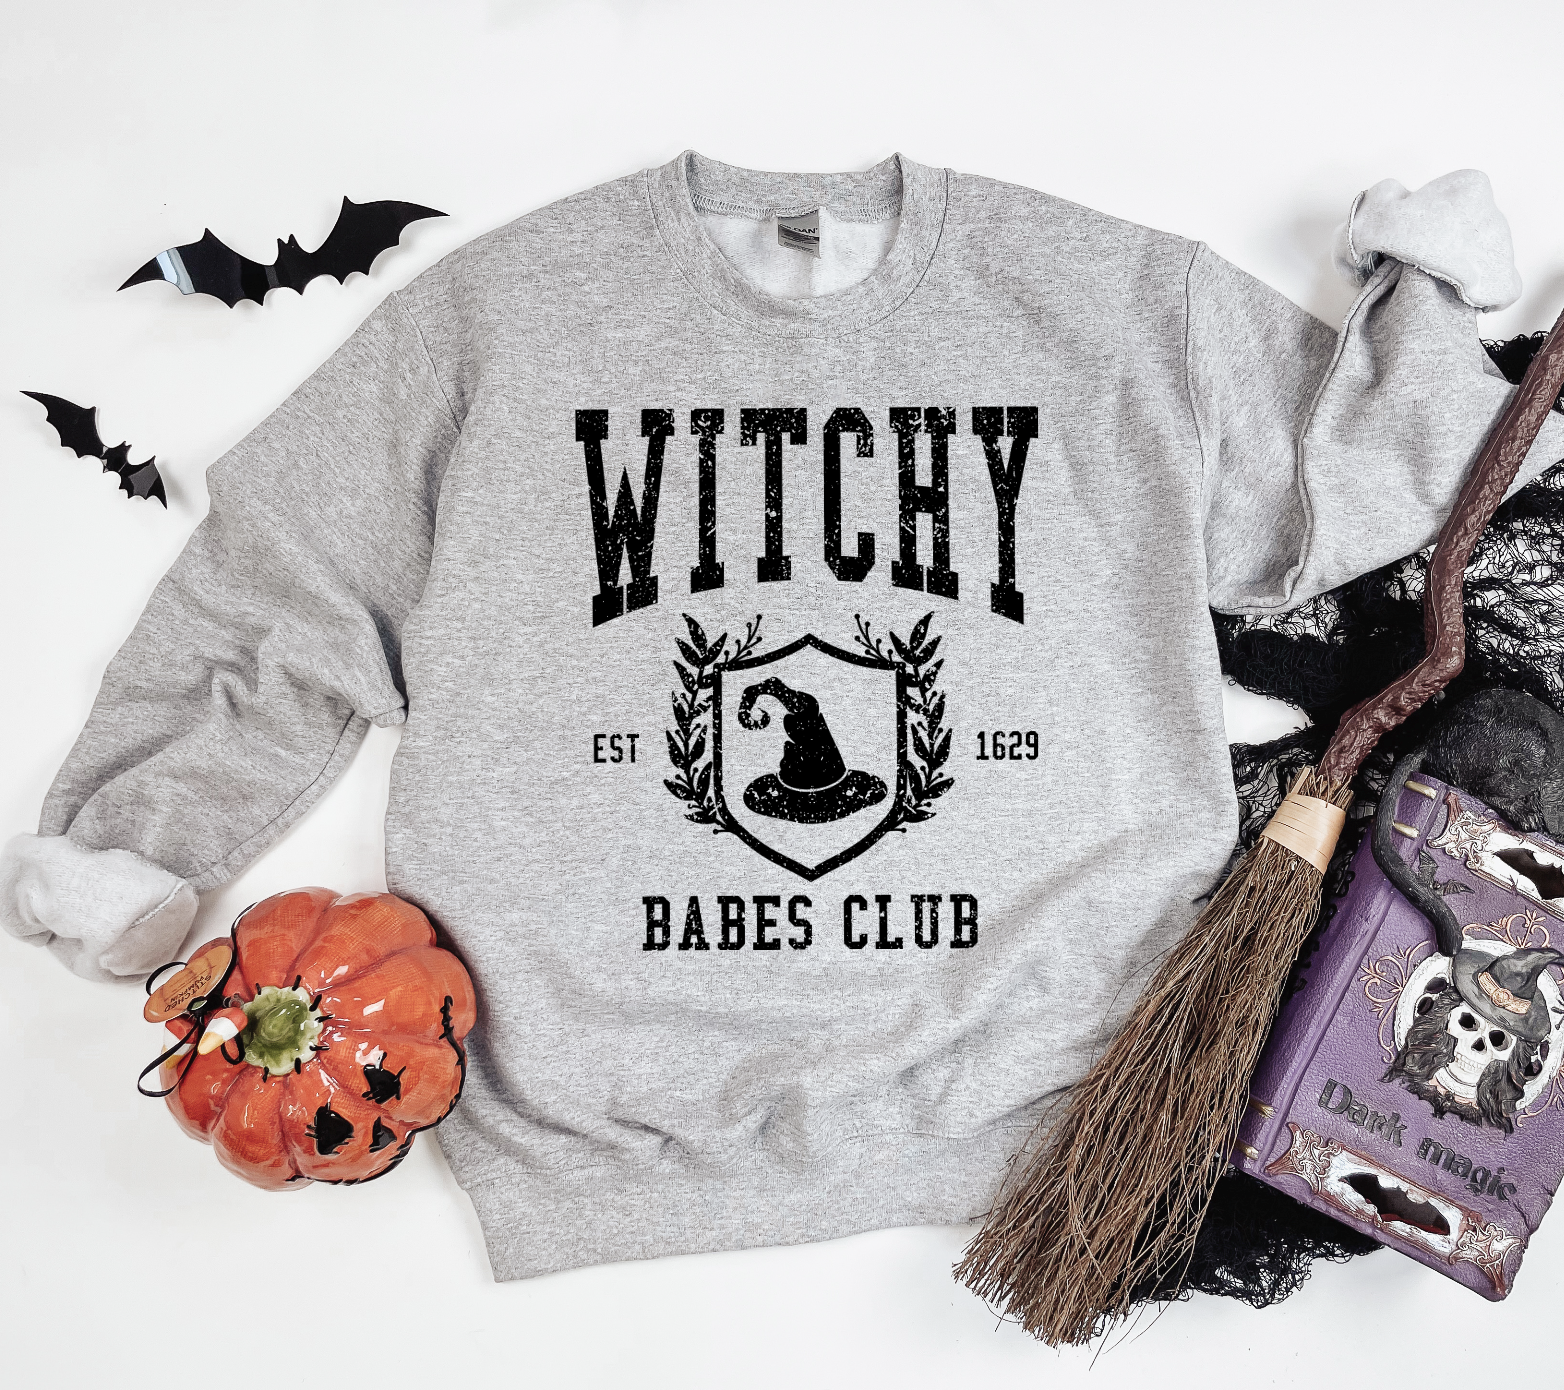 Witchy Babes Club sweatshirt